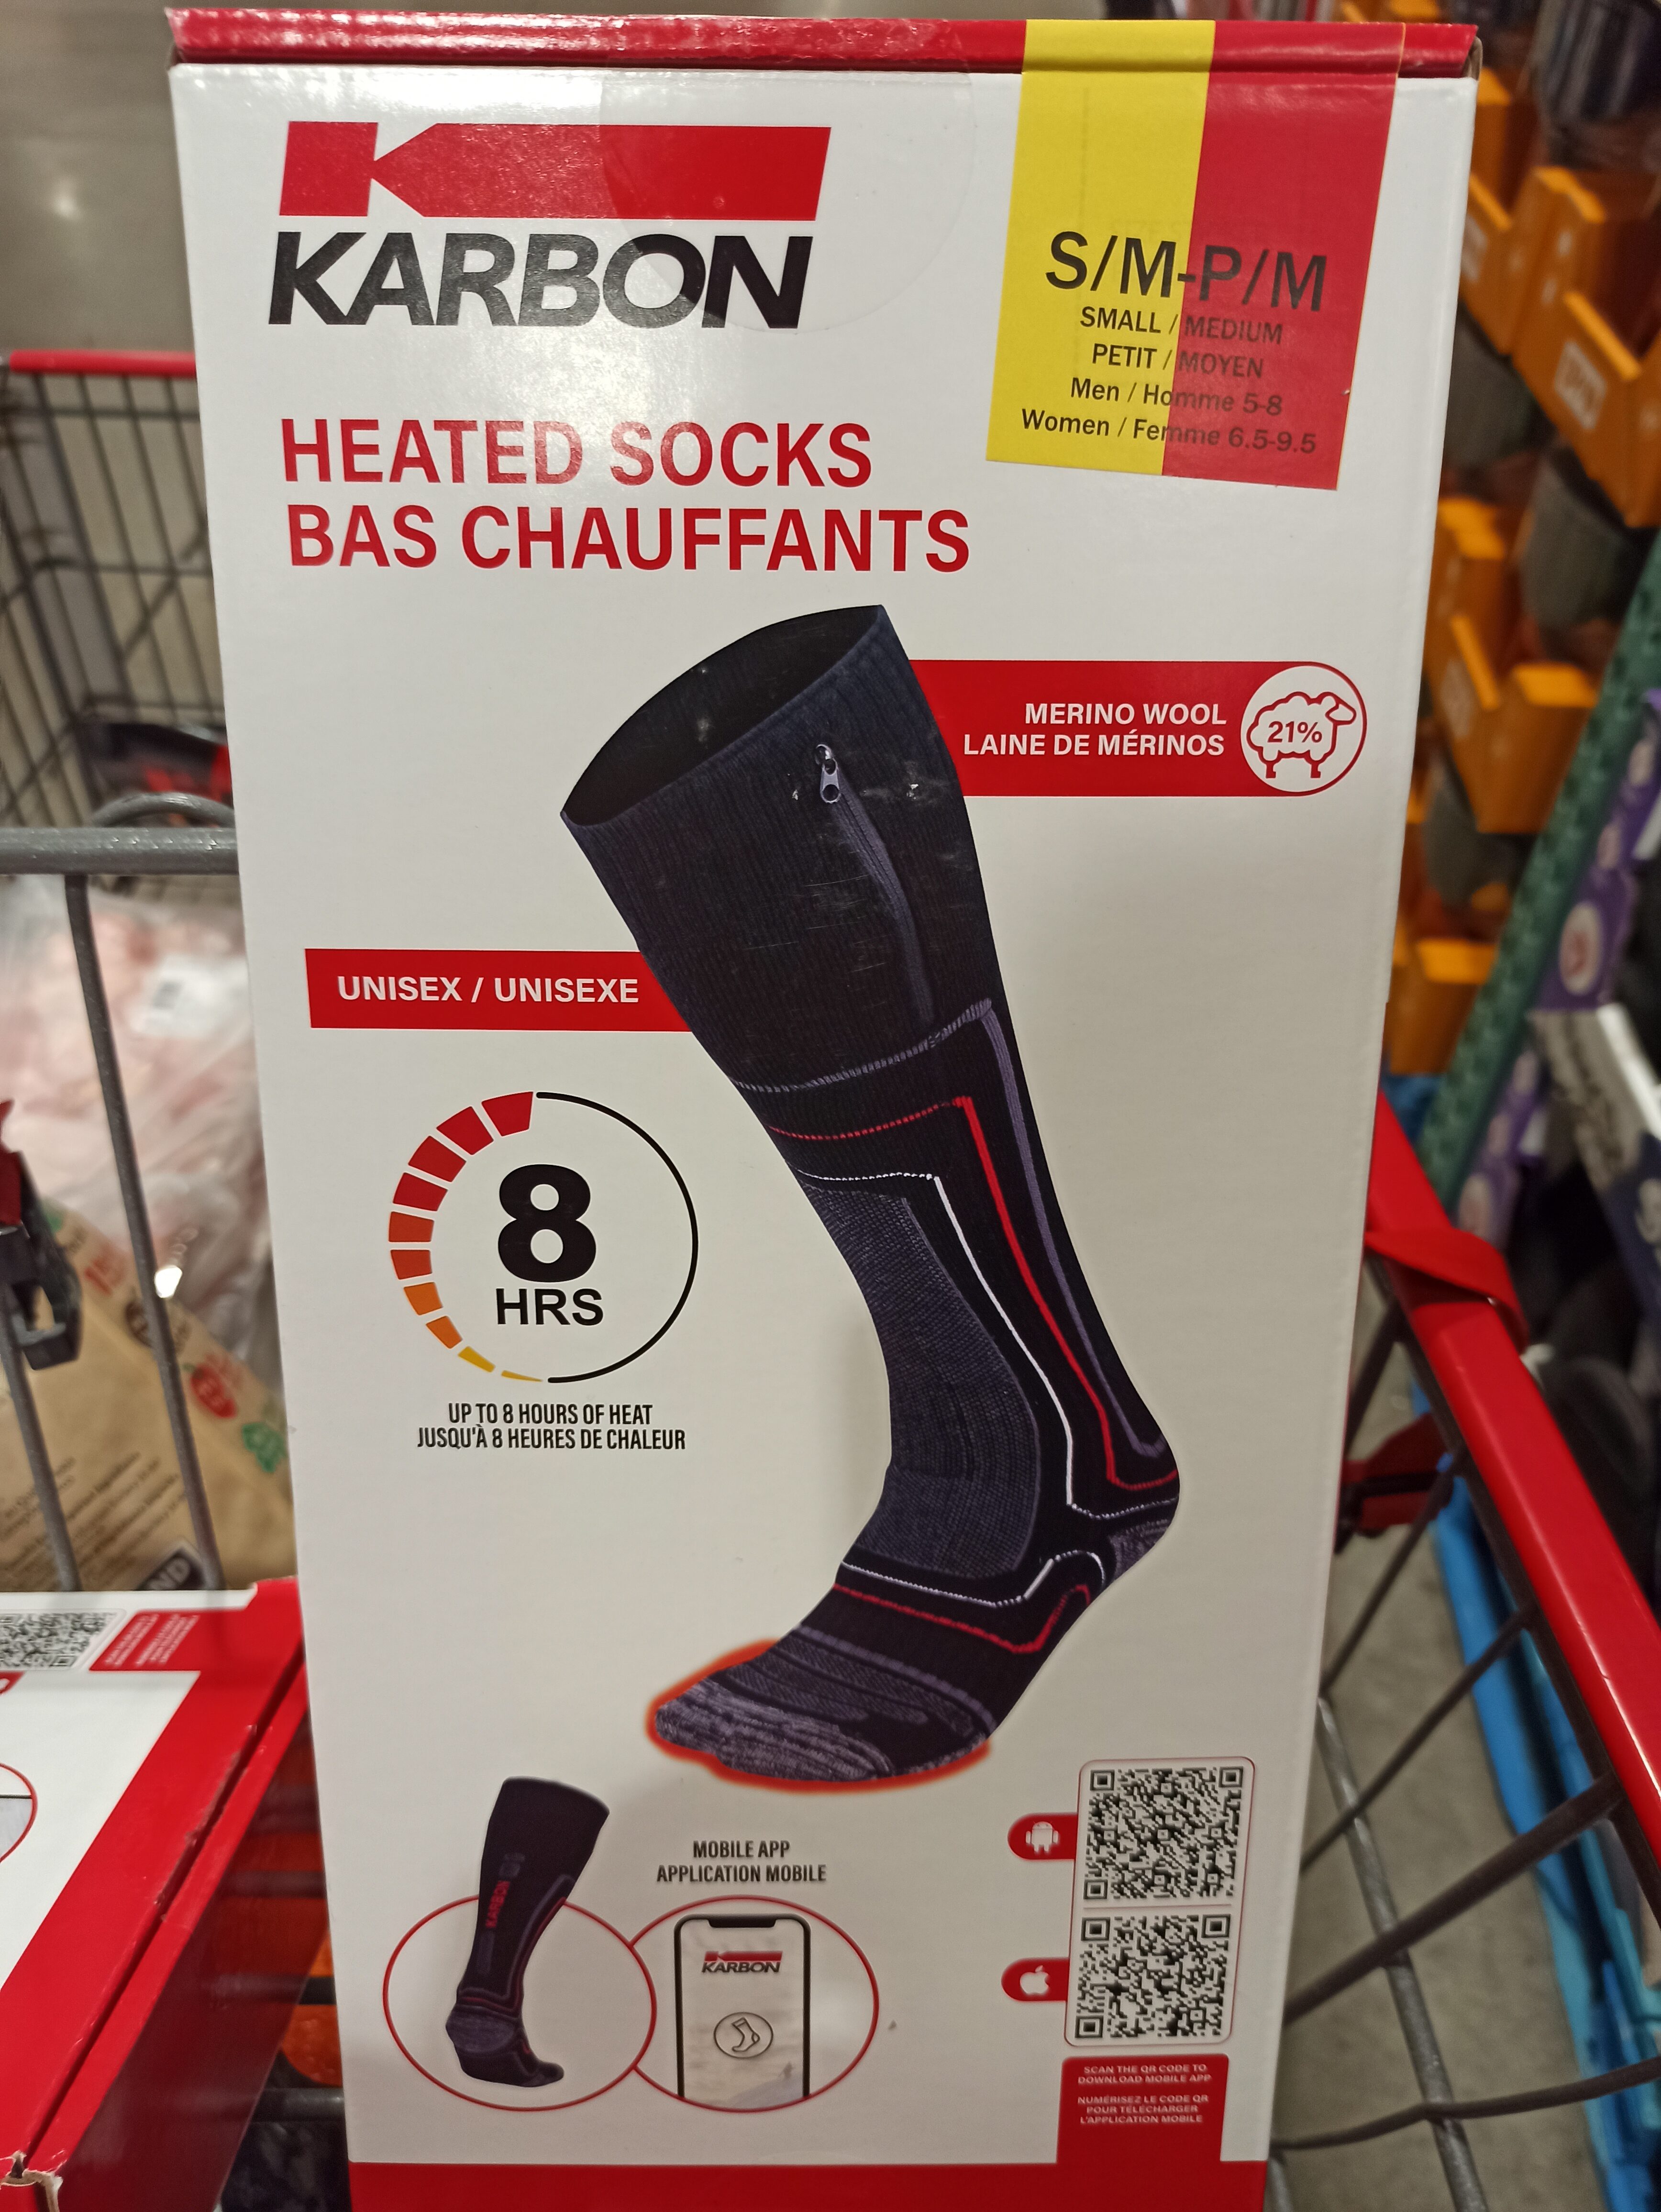 Costco] Karbon heated socks - 69.97 Clearance - RedFlagDeals.com